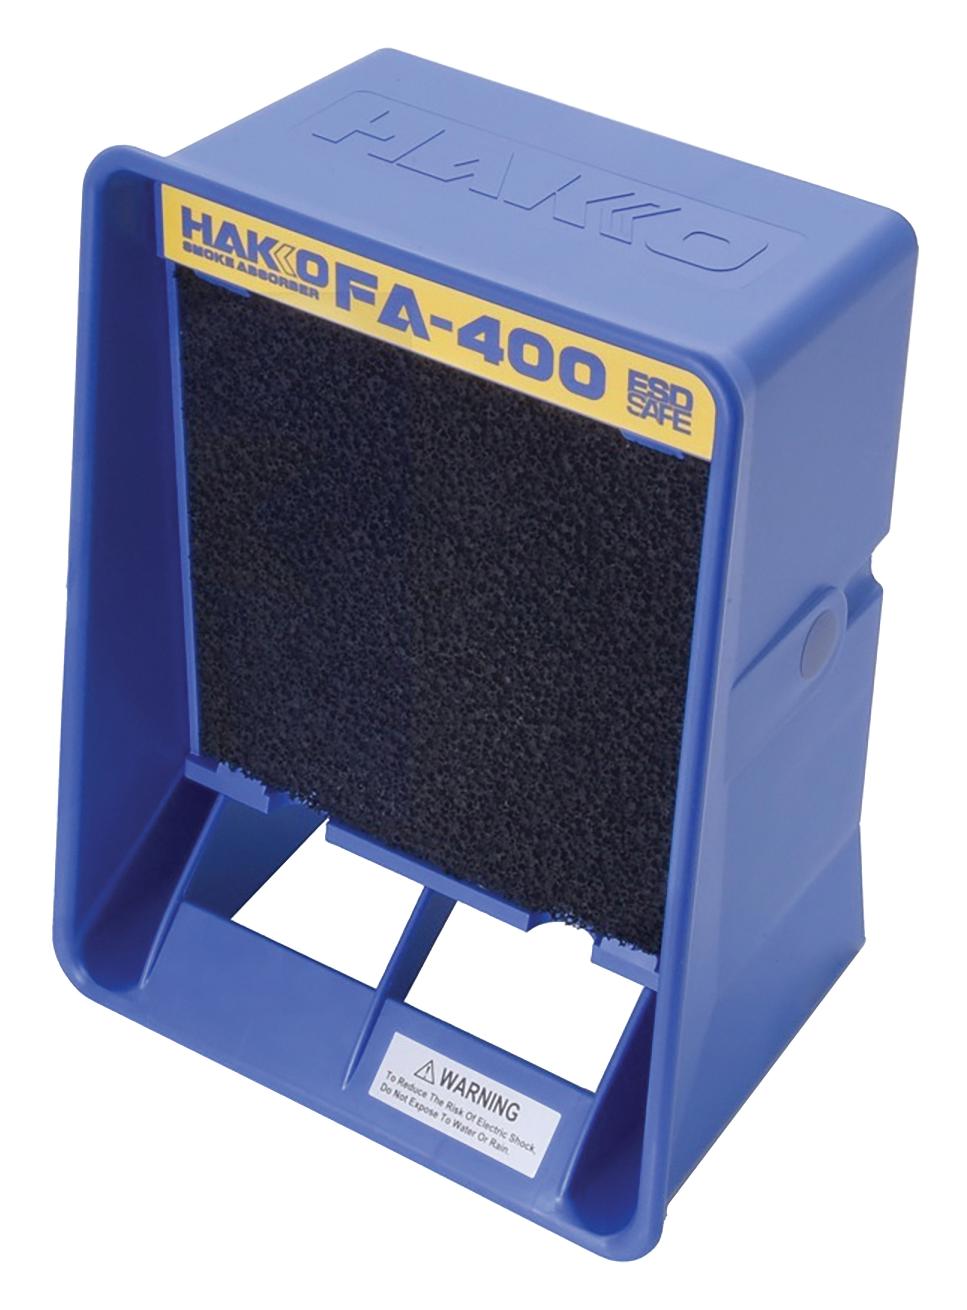 Hakko Fa400-15 Fume Extraction Unit, 18W, 230Vac